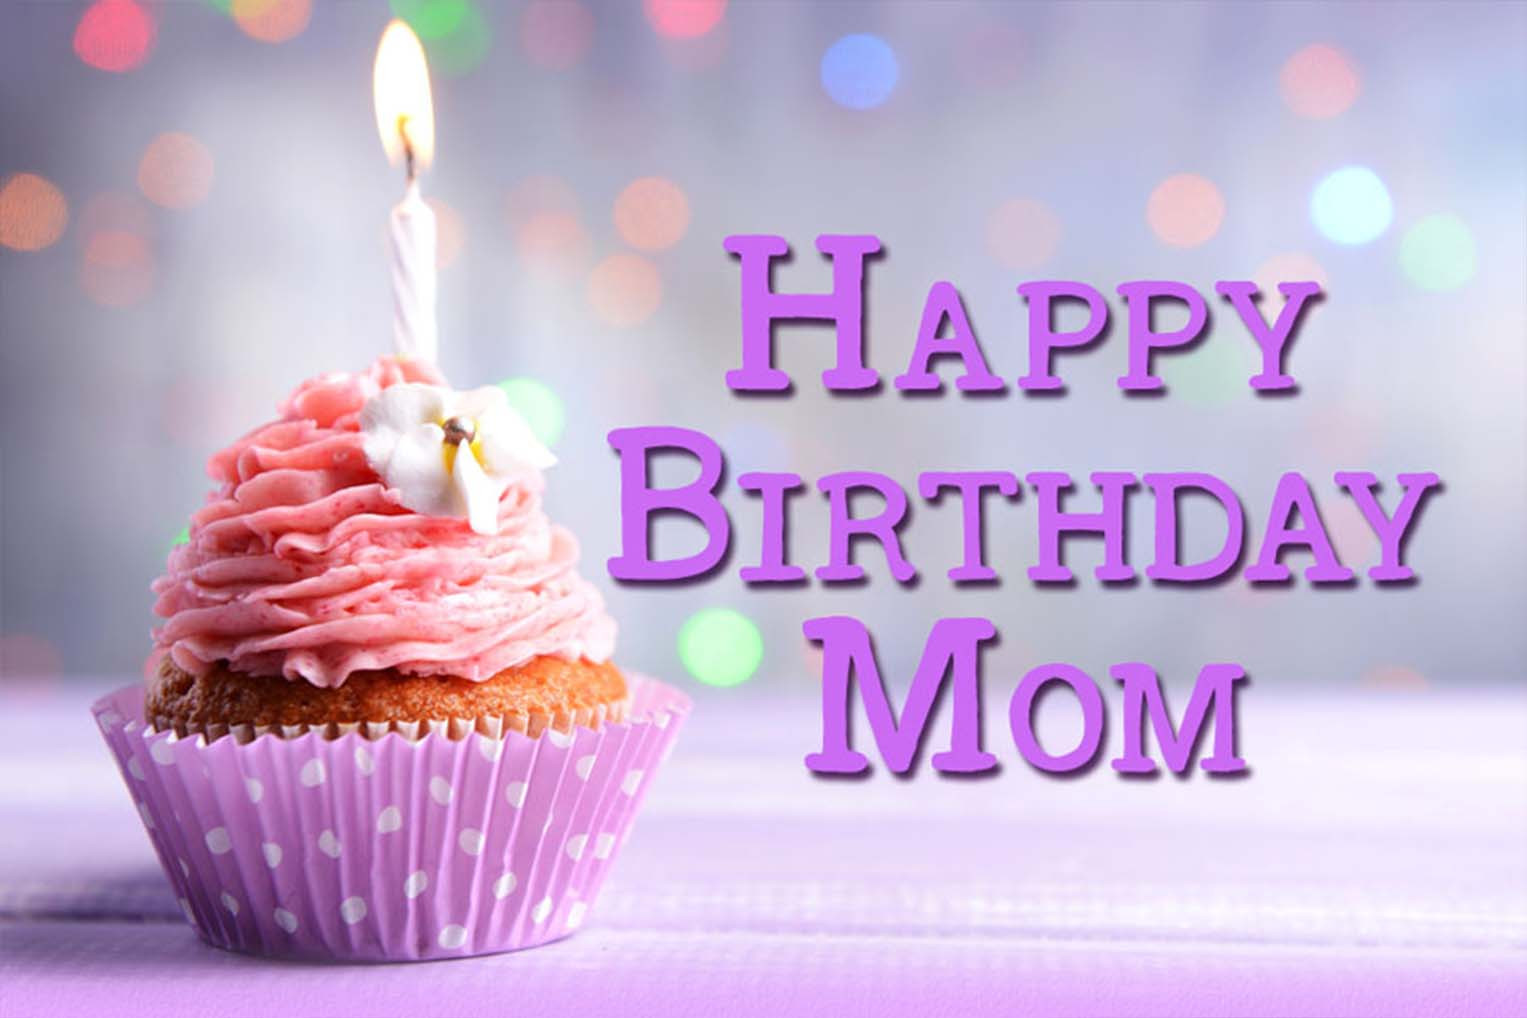 Birthday Wishes For Mom
 35 Happy Birthday Mom Quotes